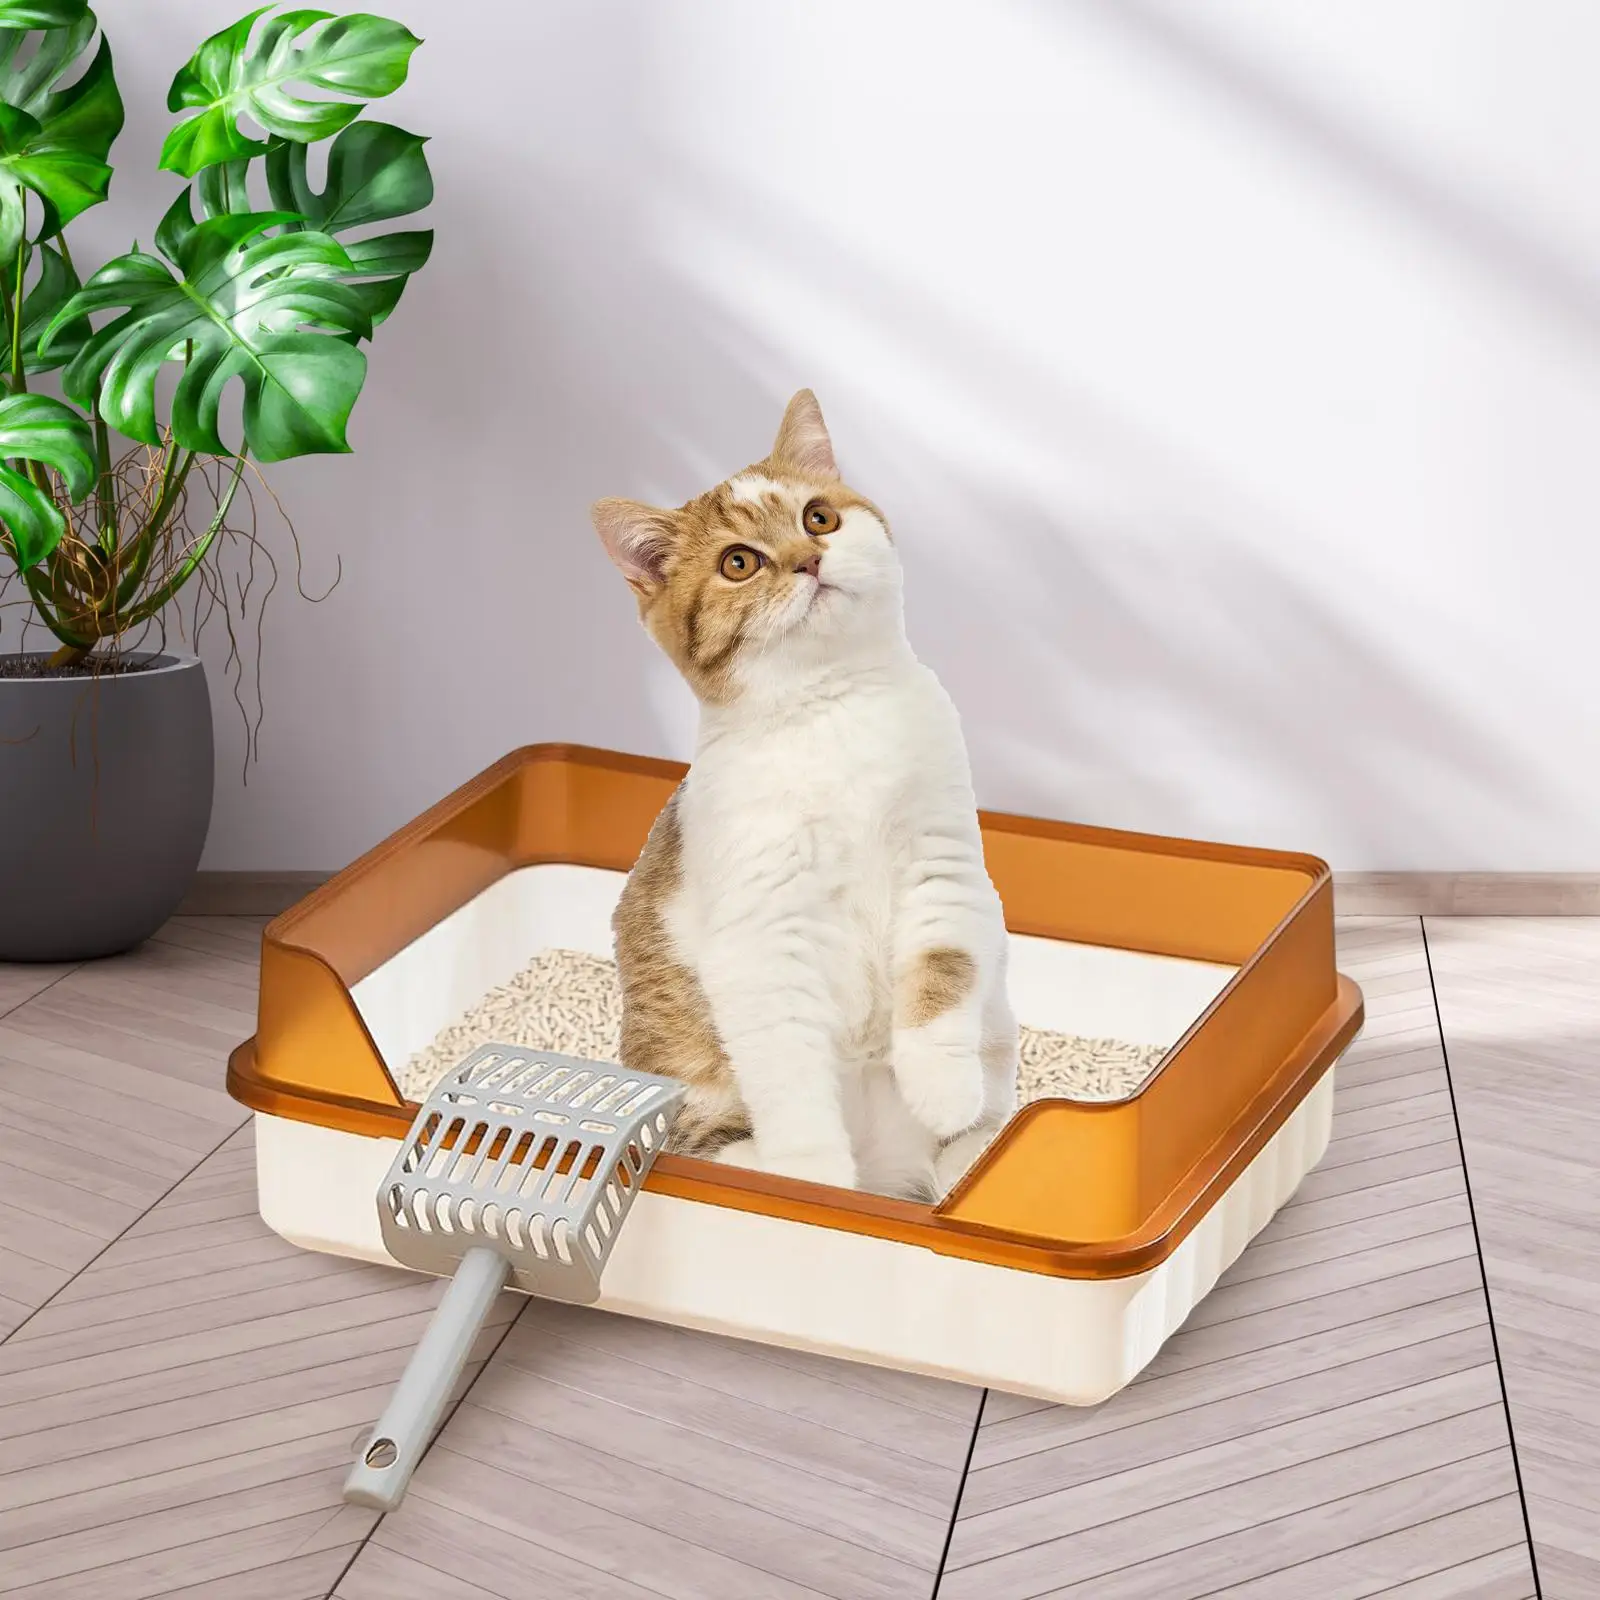 Pet Litter Tray Potty Toilet Litter Pan High Sided Cats Litter Box for Small Medium Cats